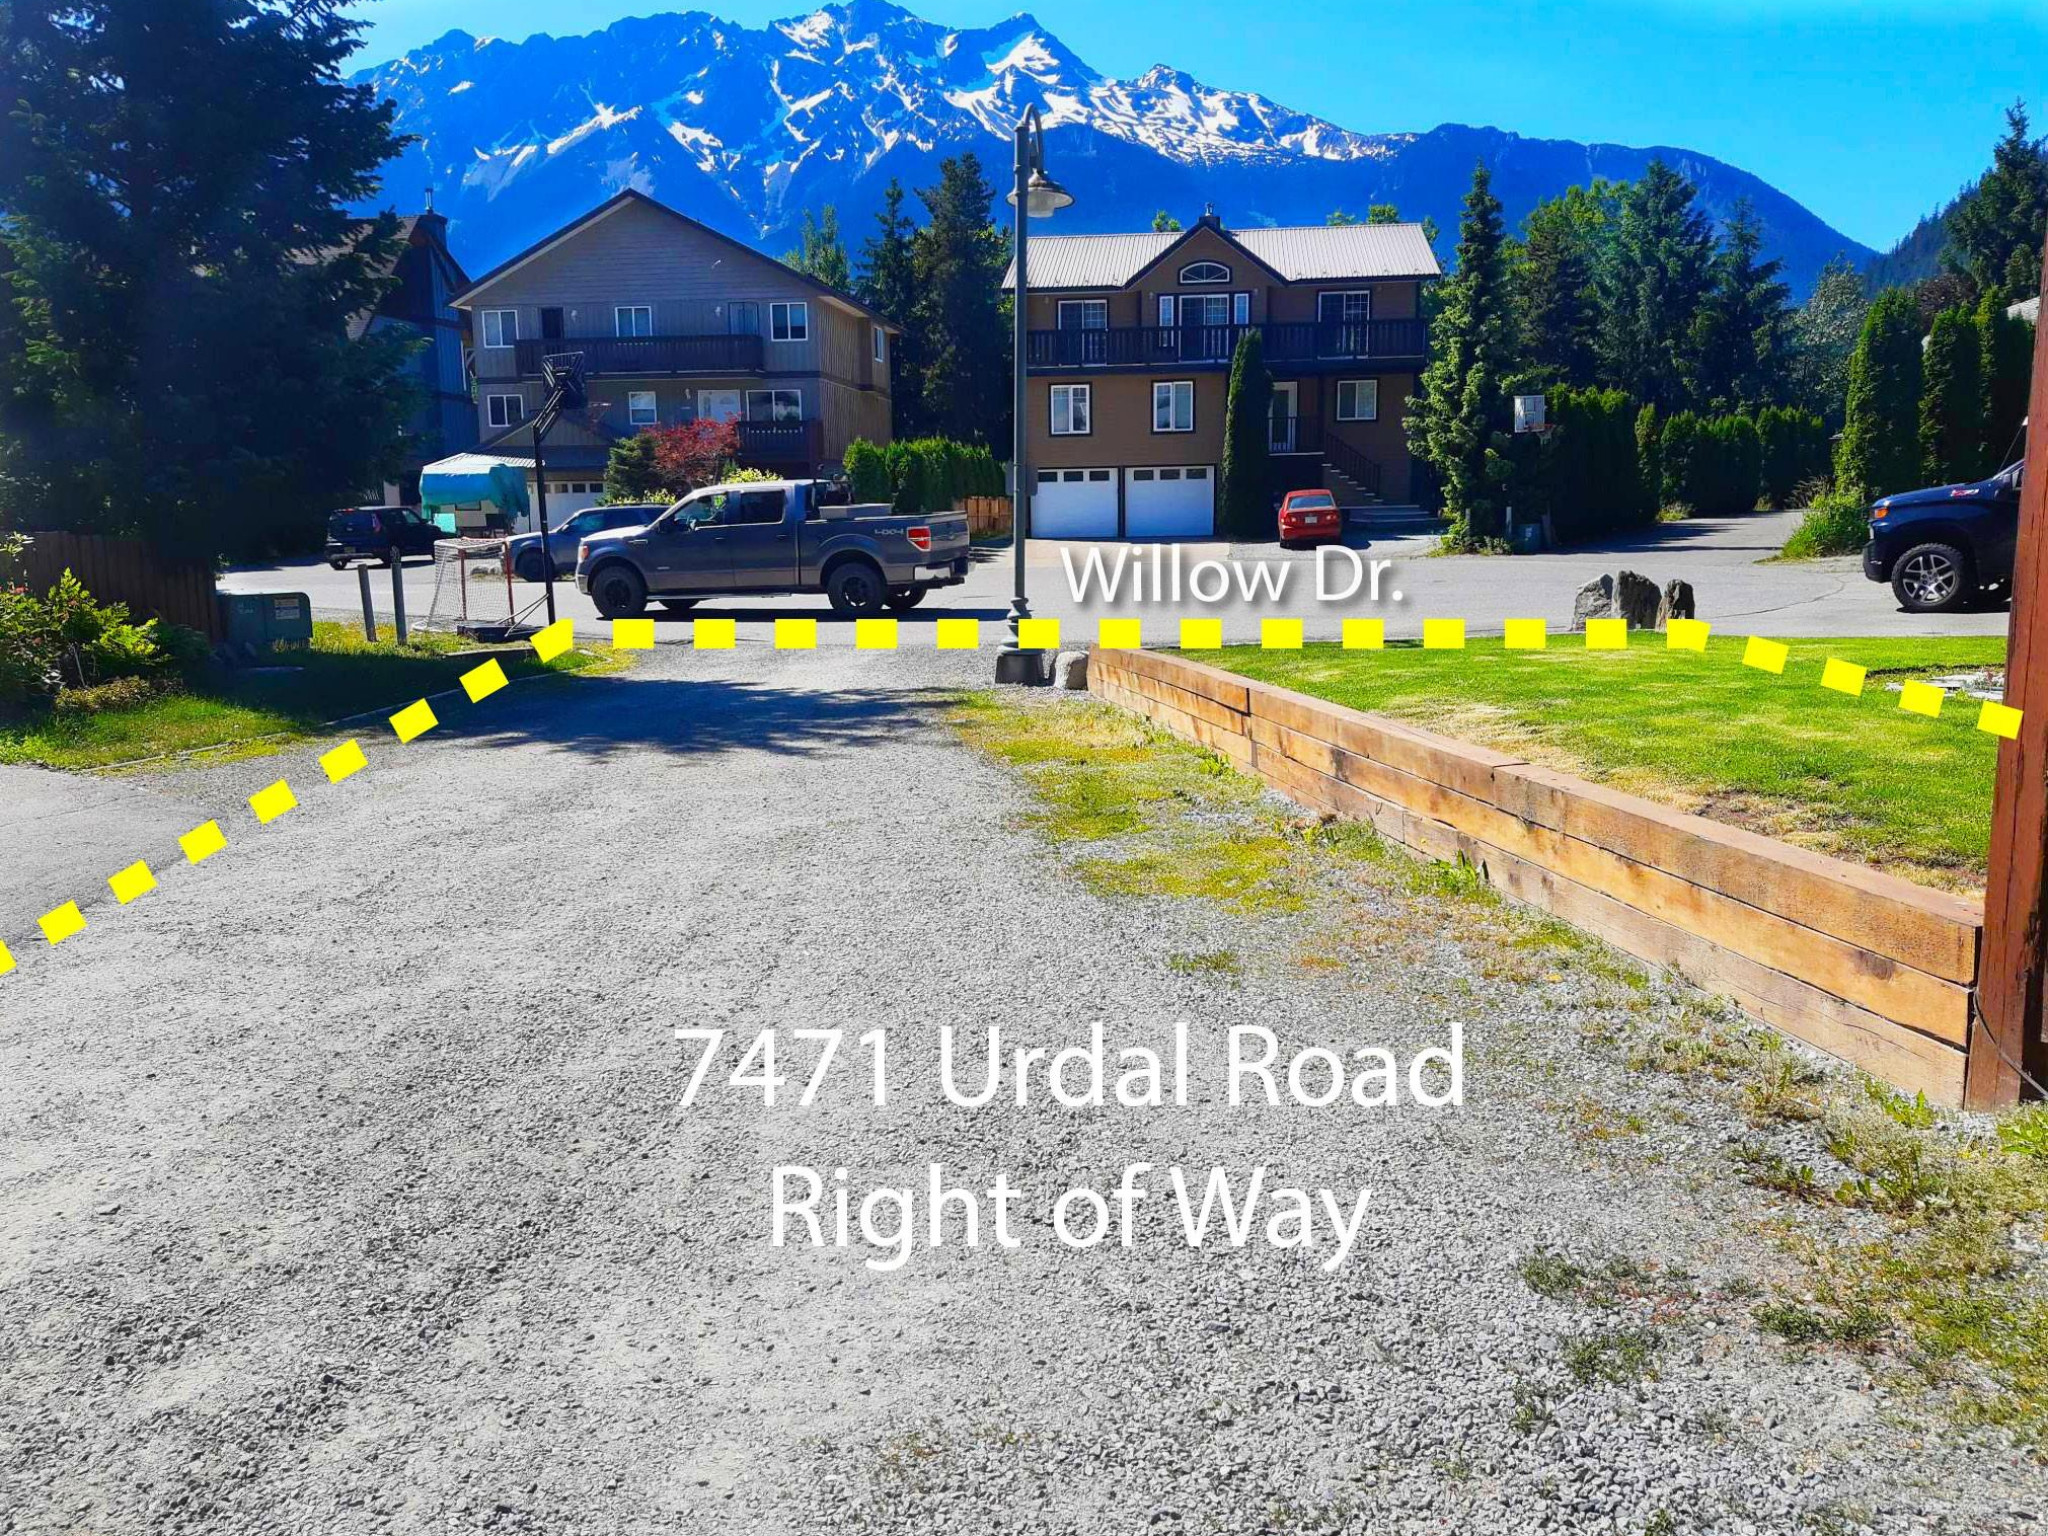 7471 Urdal Road image 26